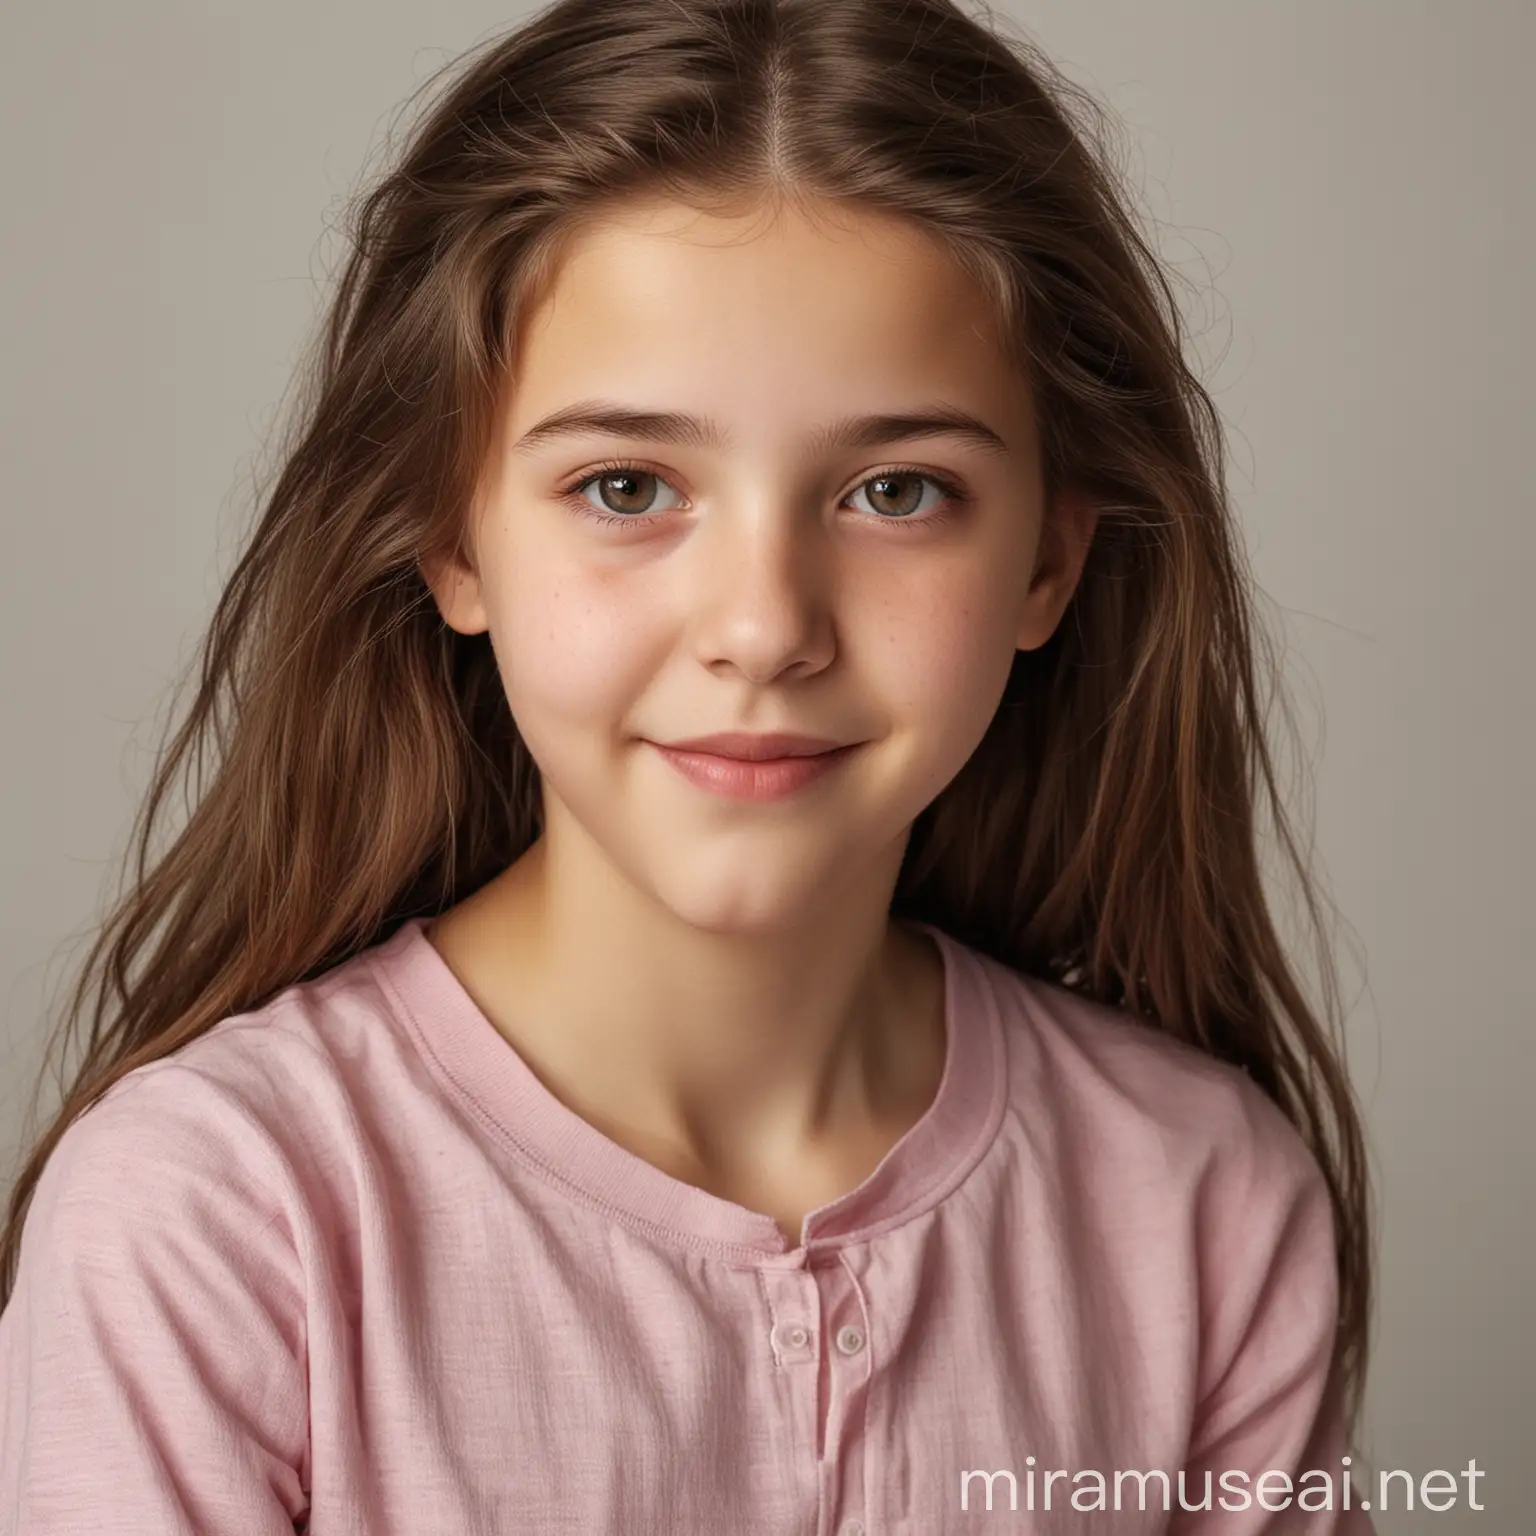 Portrait of a TwelveYearOld Girl with Expressive Eyes